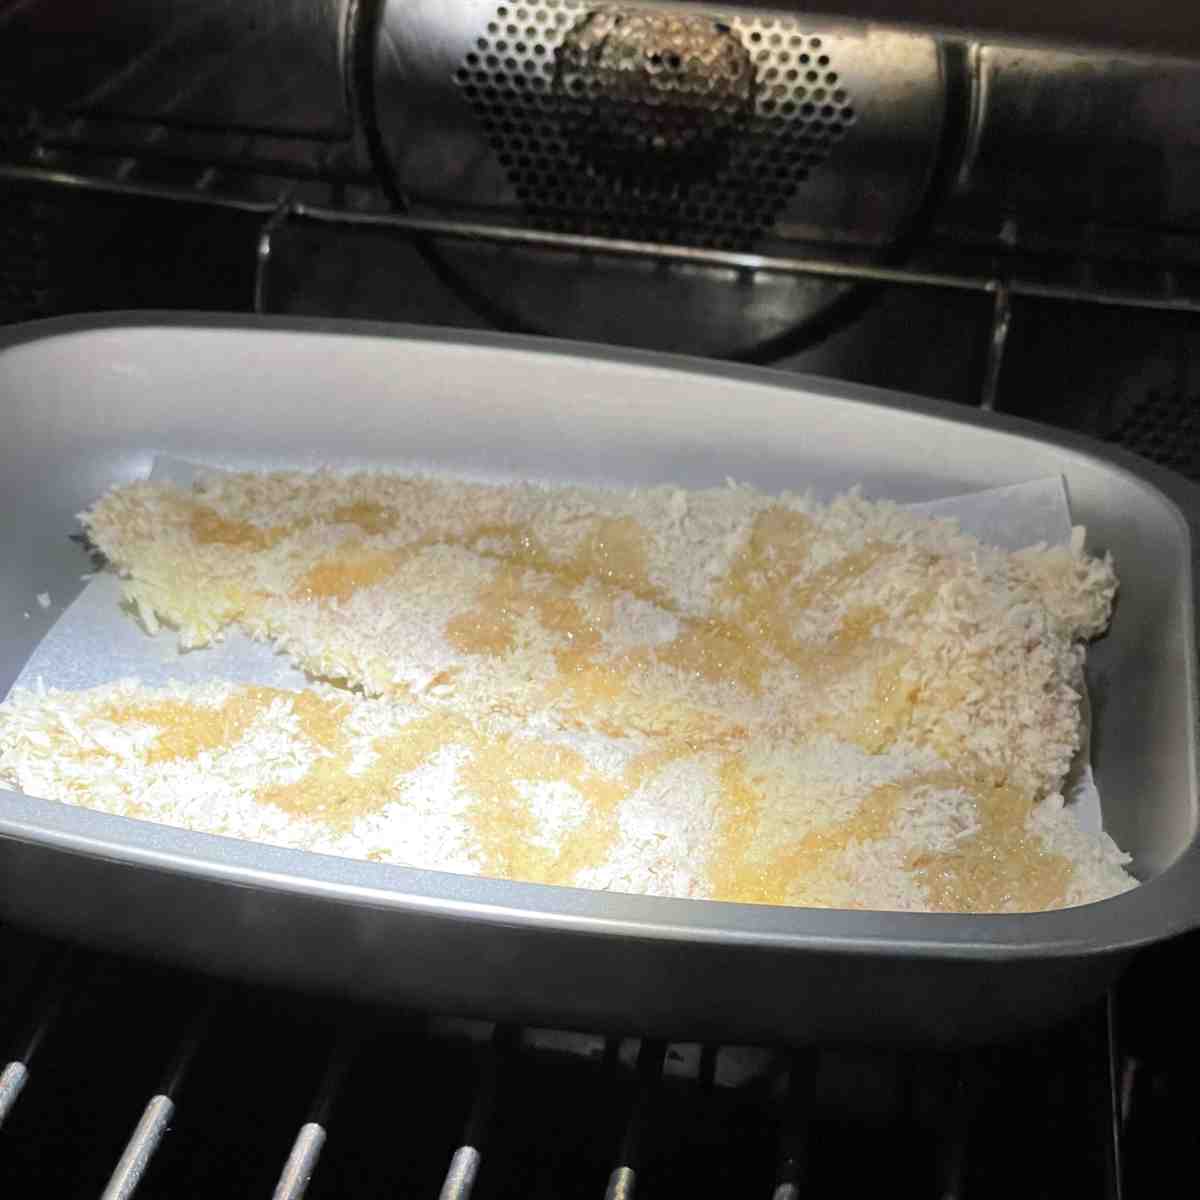 bake breaded cutlet in oven